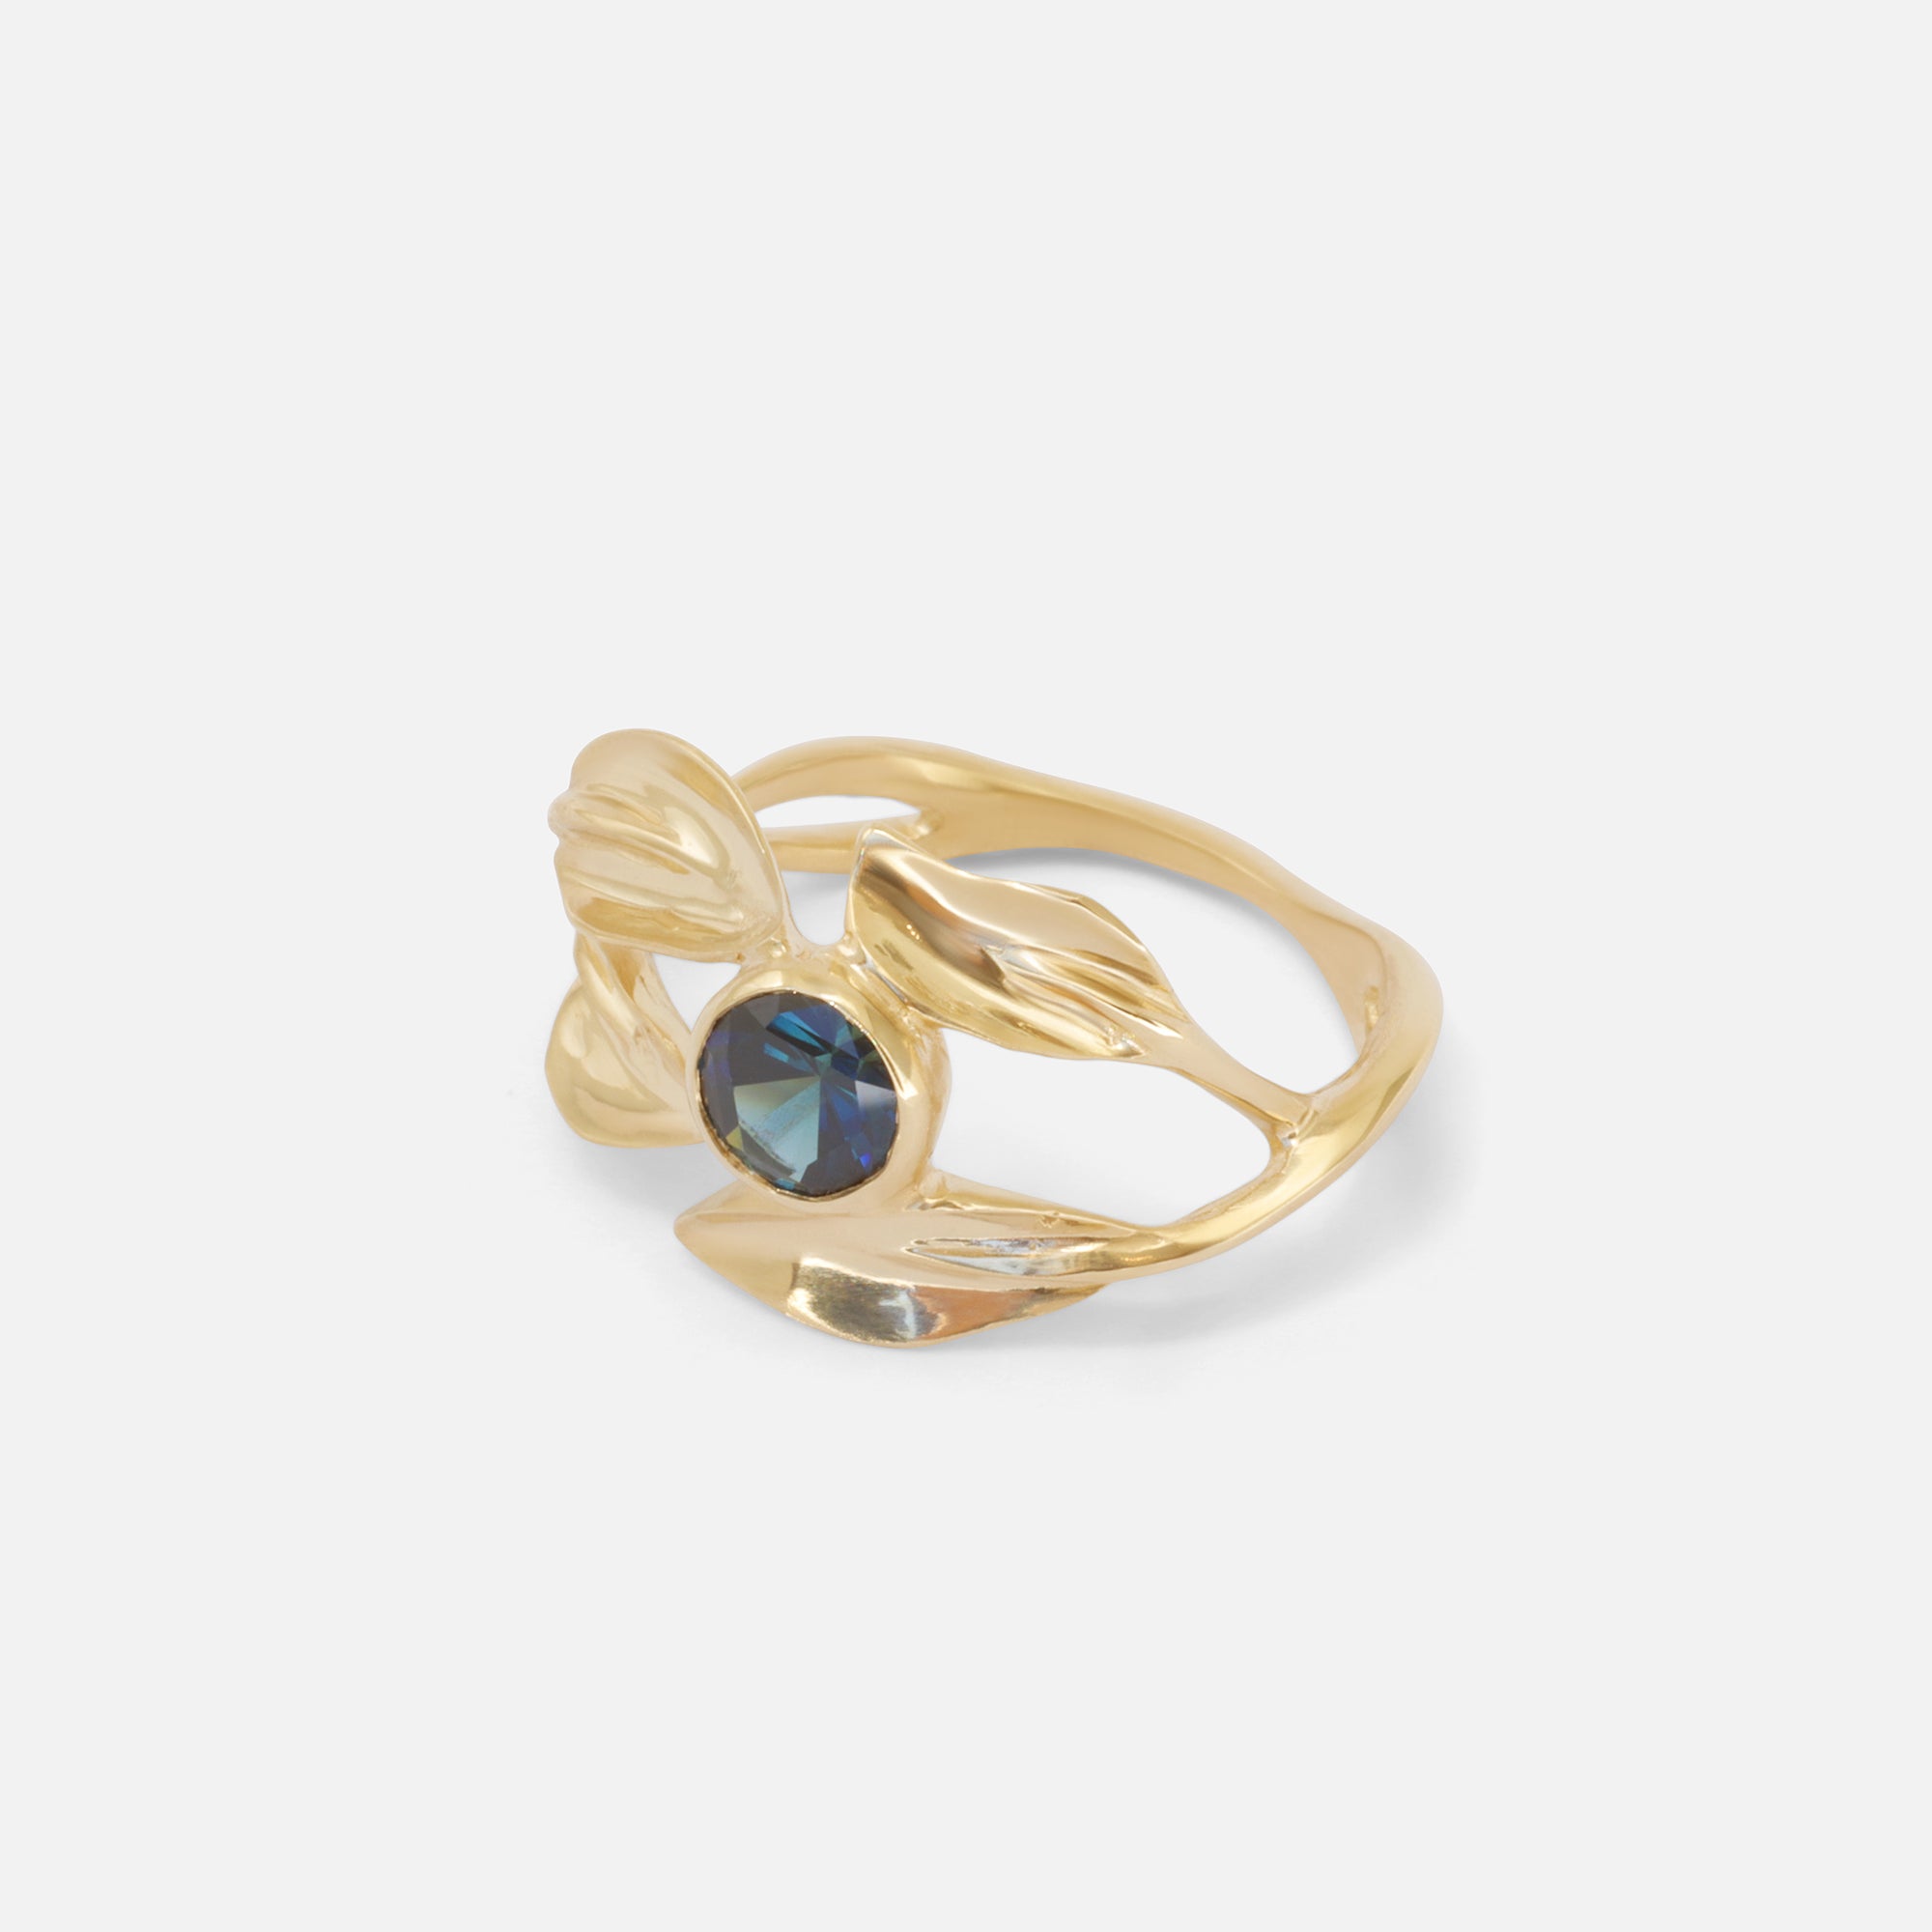 Willow / Kenyan Sapphire Ring By Kestrel Dillon